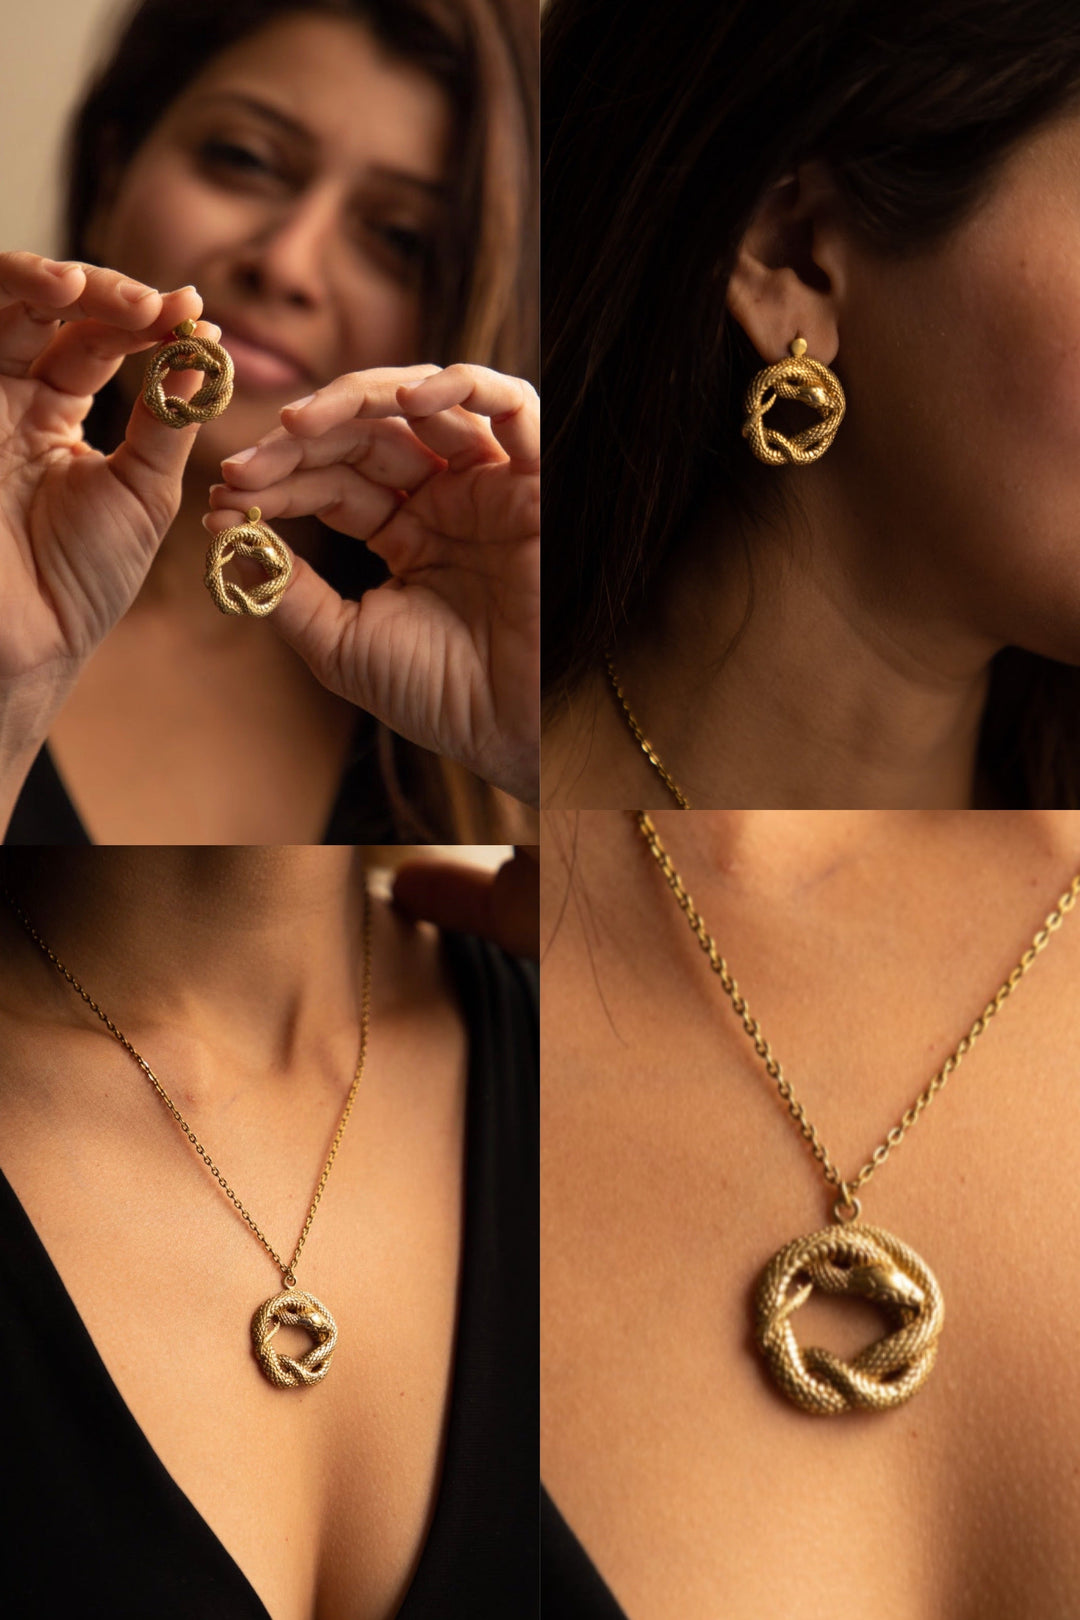 Snake coil necklace + earrings combo